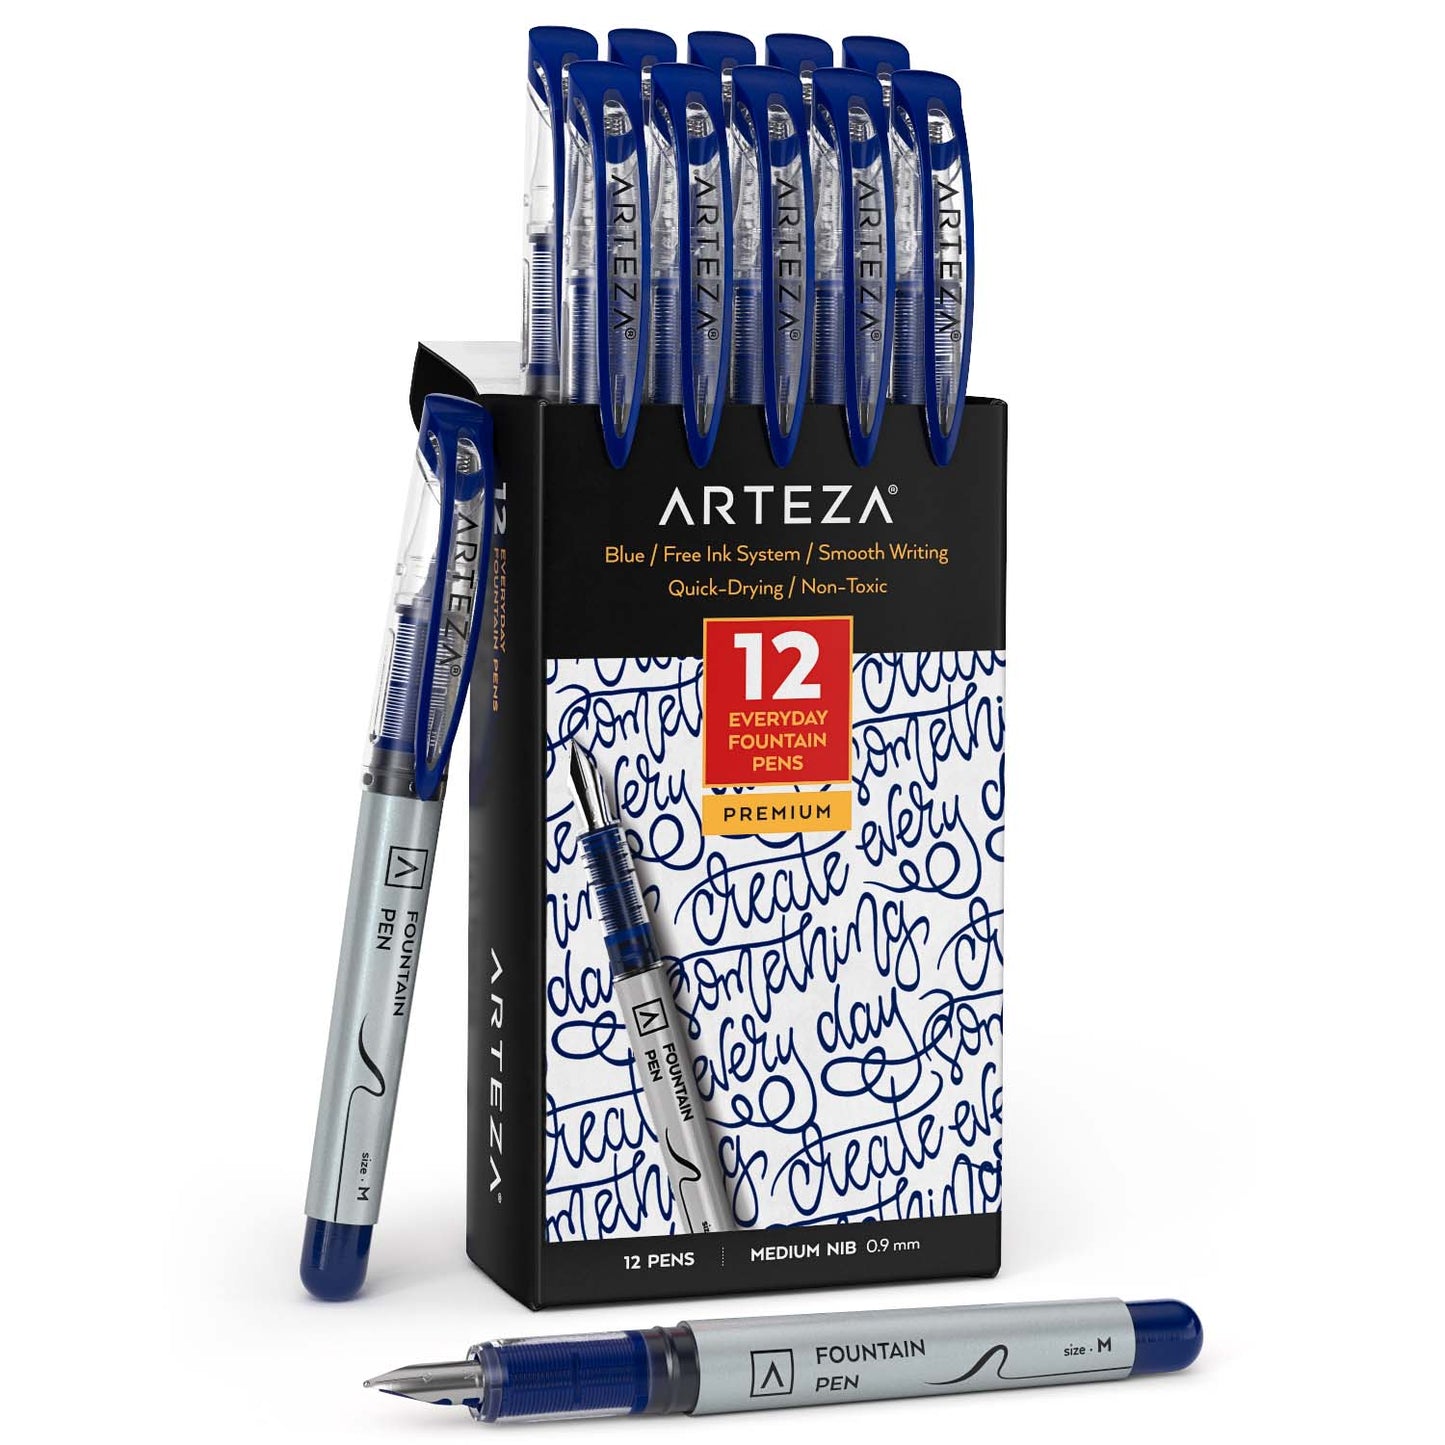 Fountain Pens, Blue, Medium Nib - 12 Pack